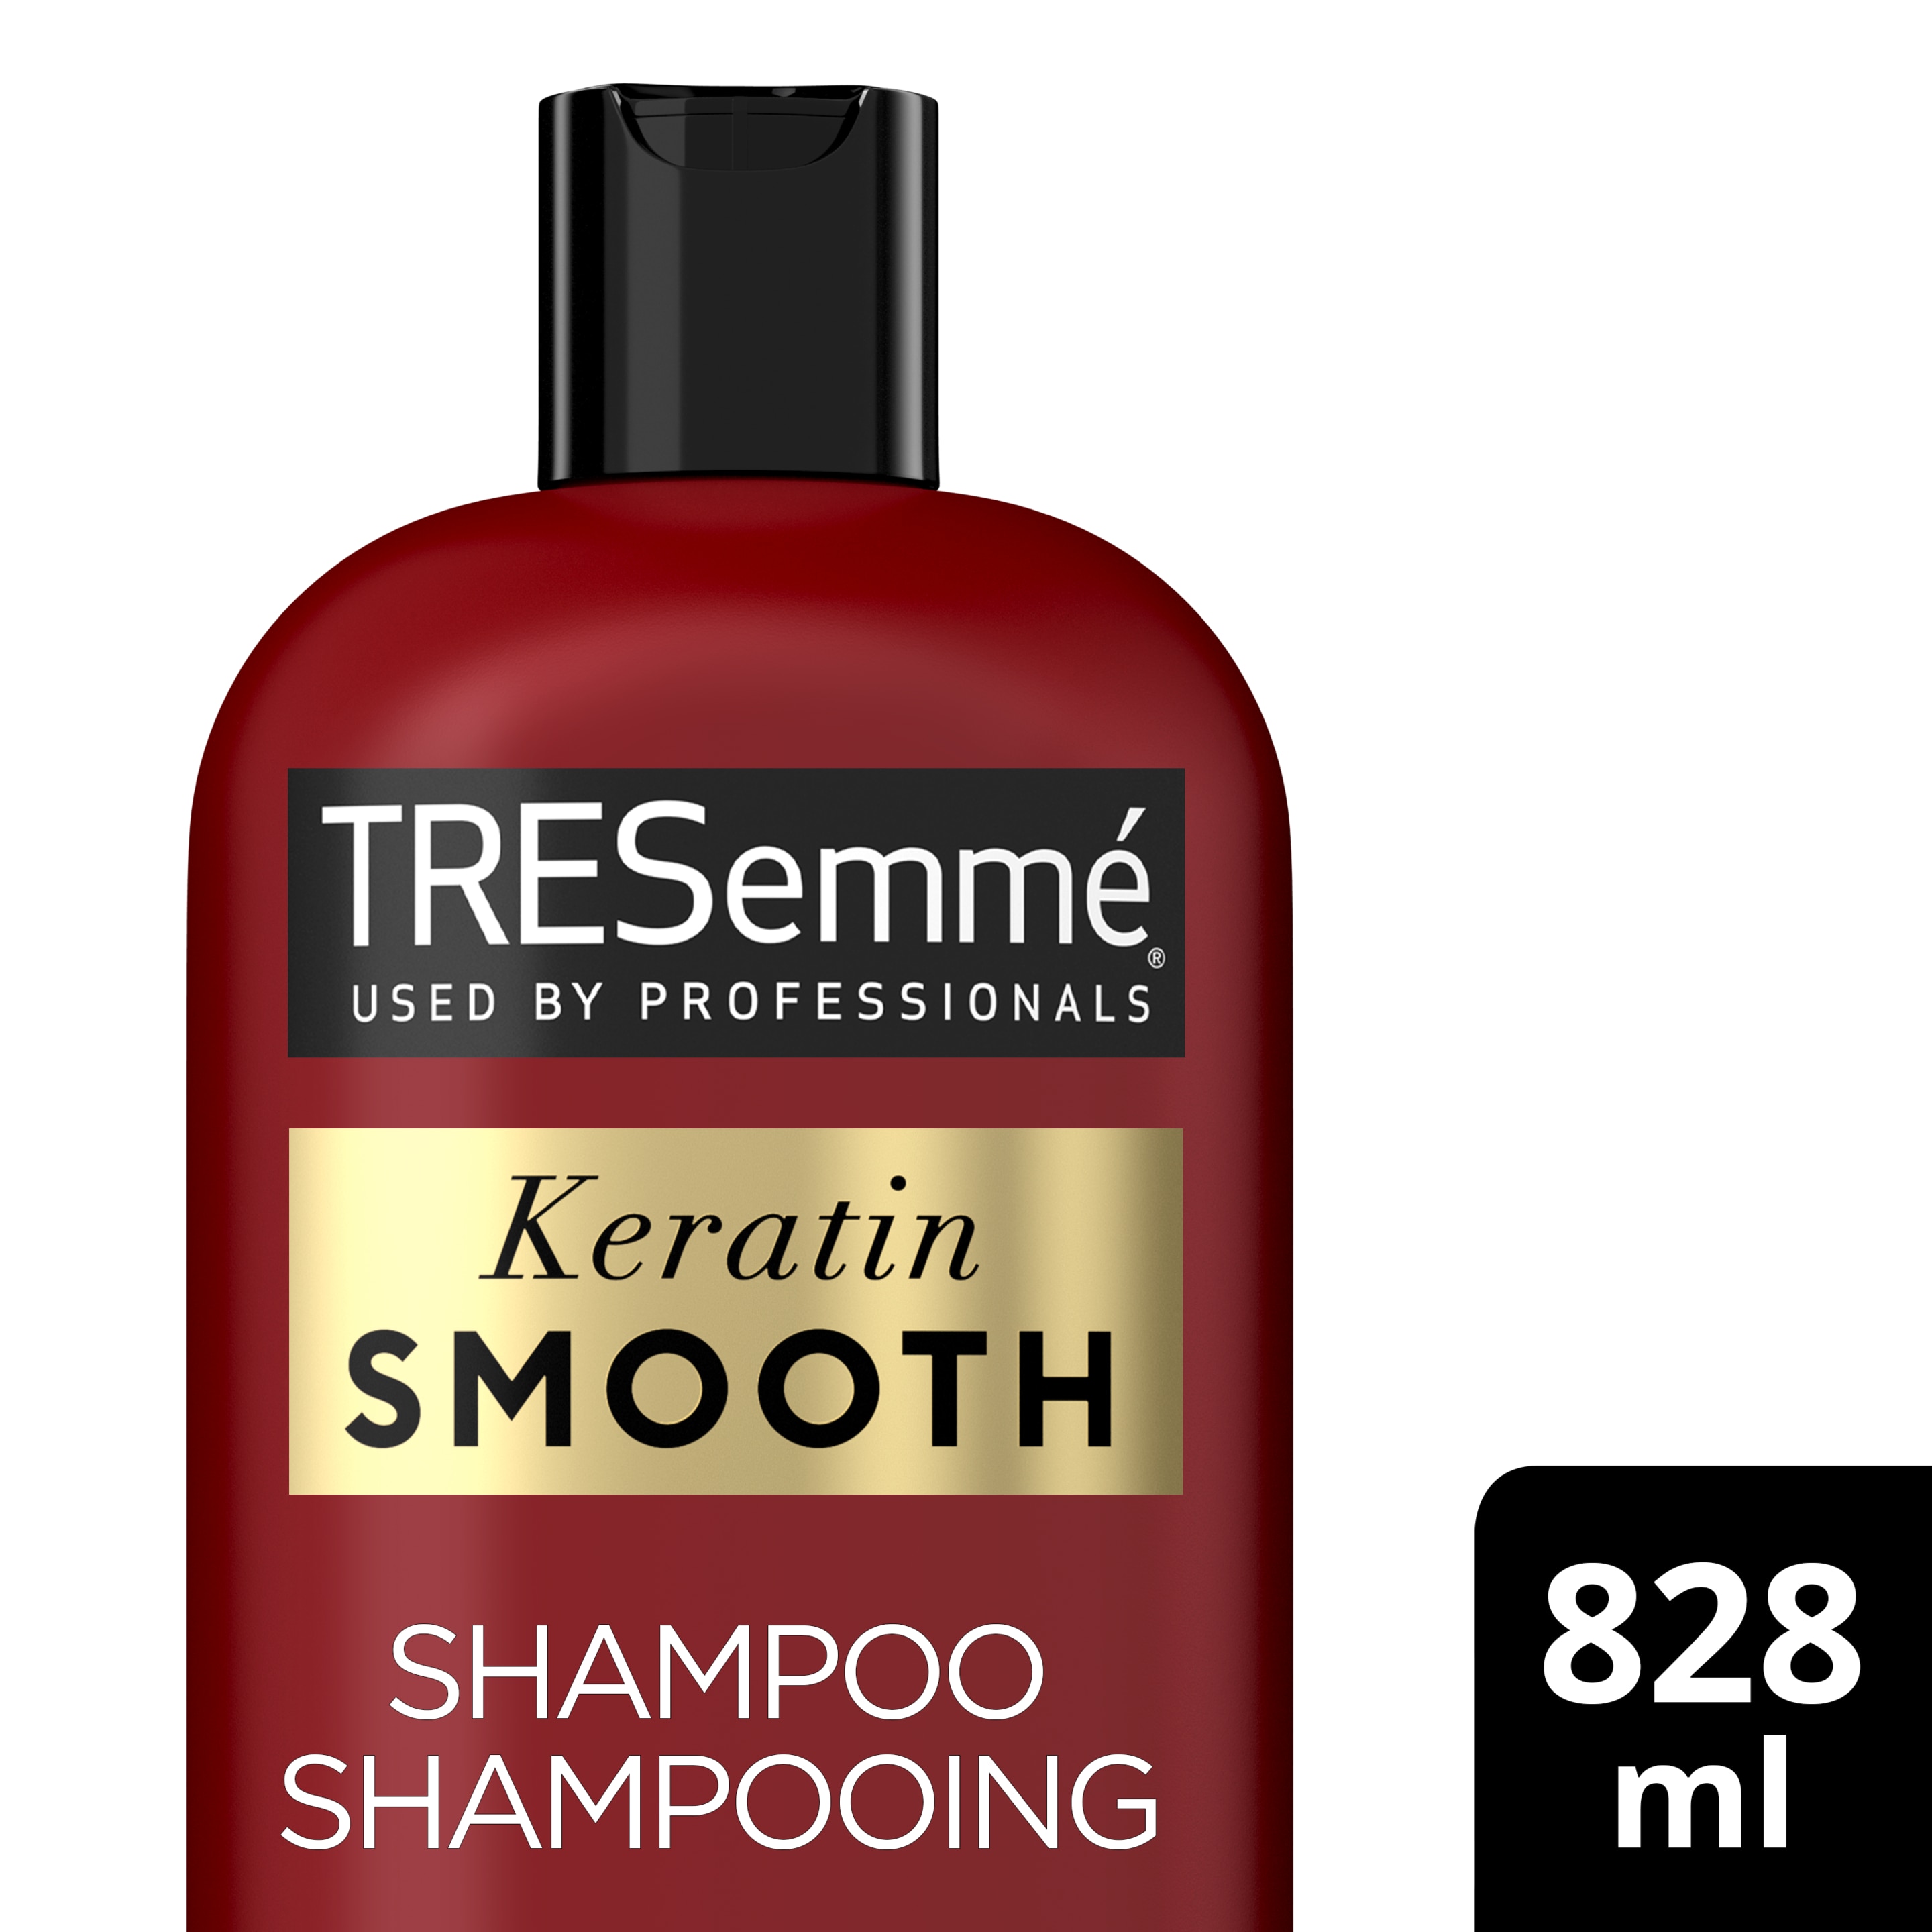 Keratin Smooth Shampoo for Frizzy Hair